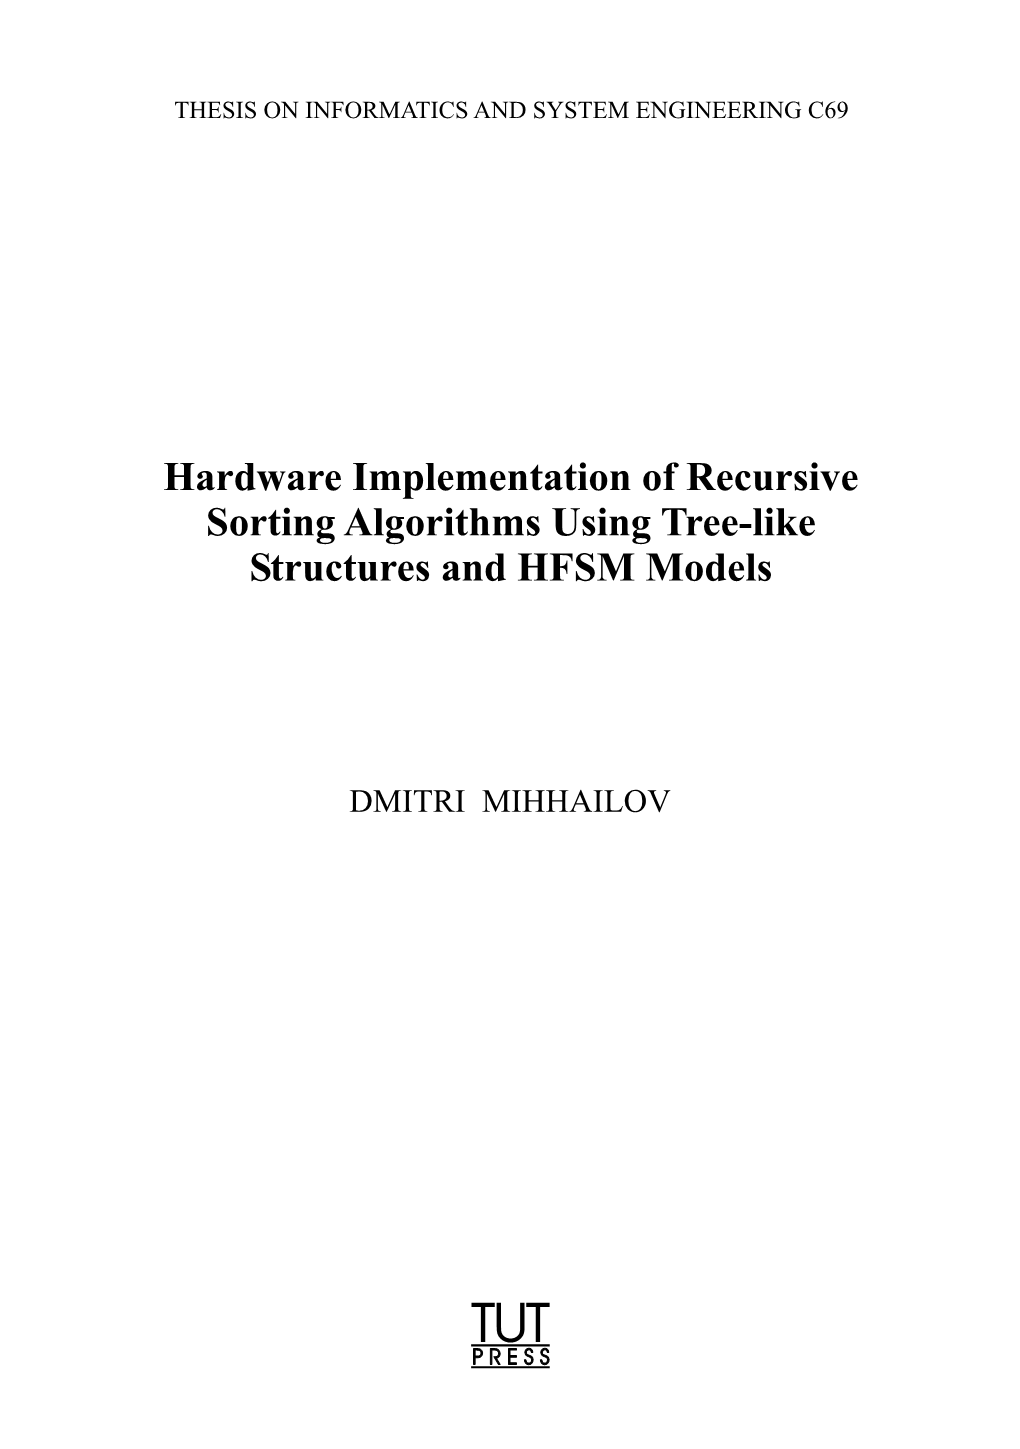 Hardware Implementation of Recursive Sorting Algorithms Using Tree-Like Structures and HFSM Models